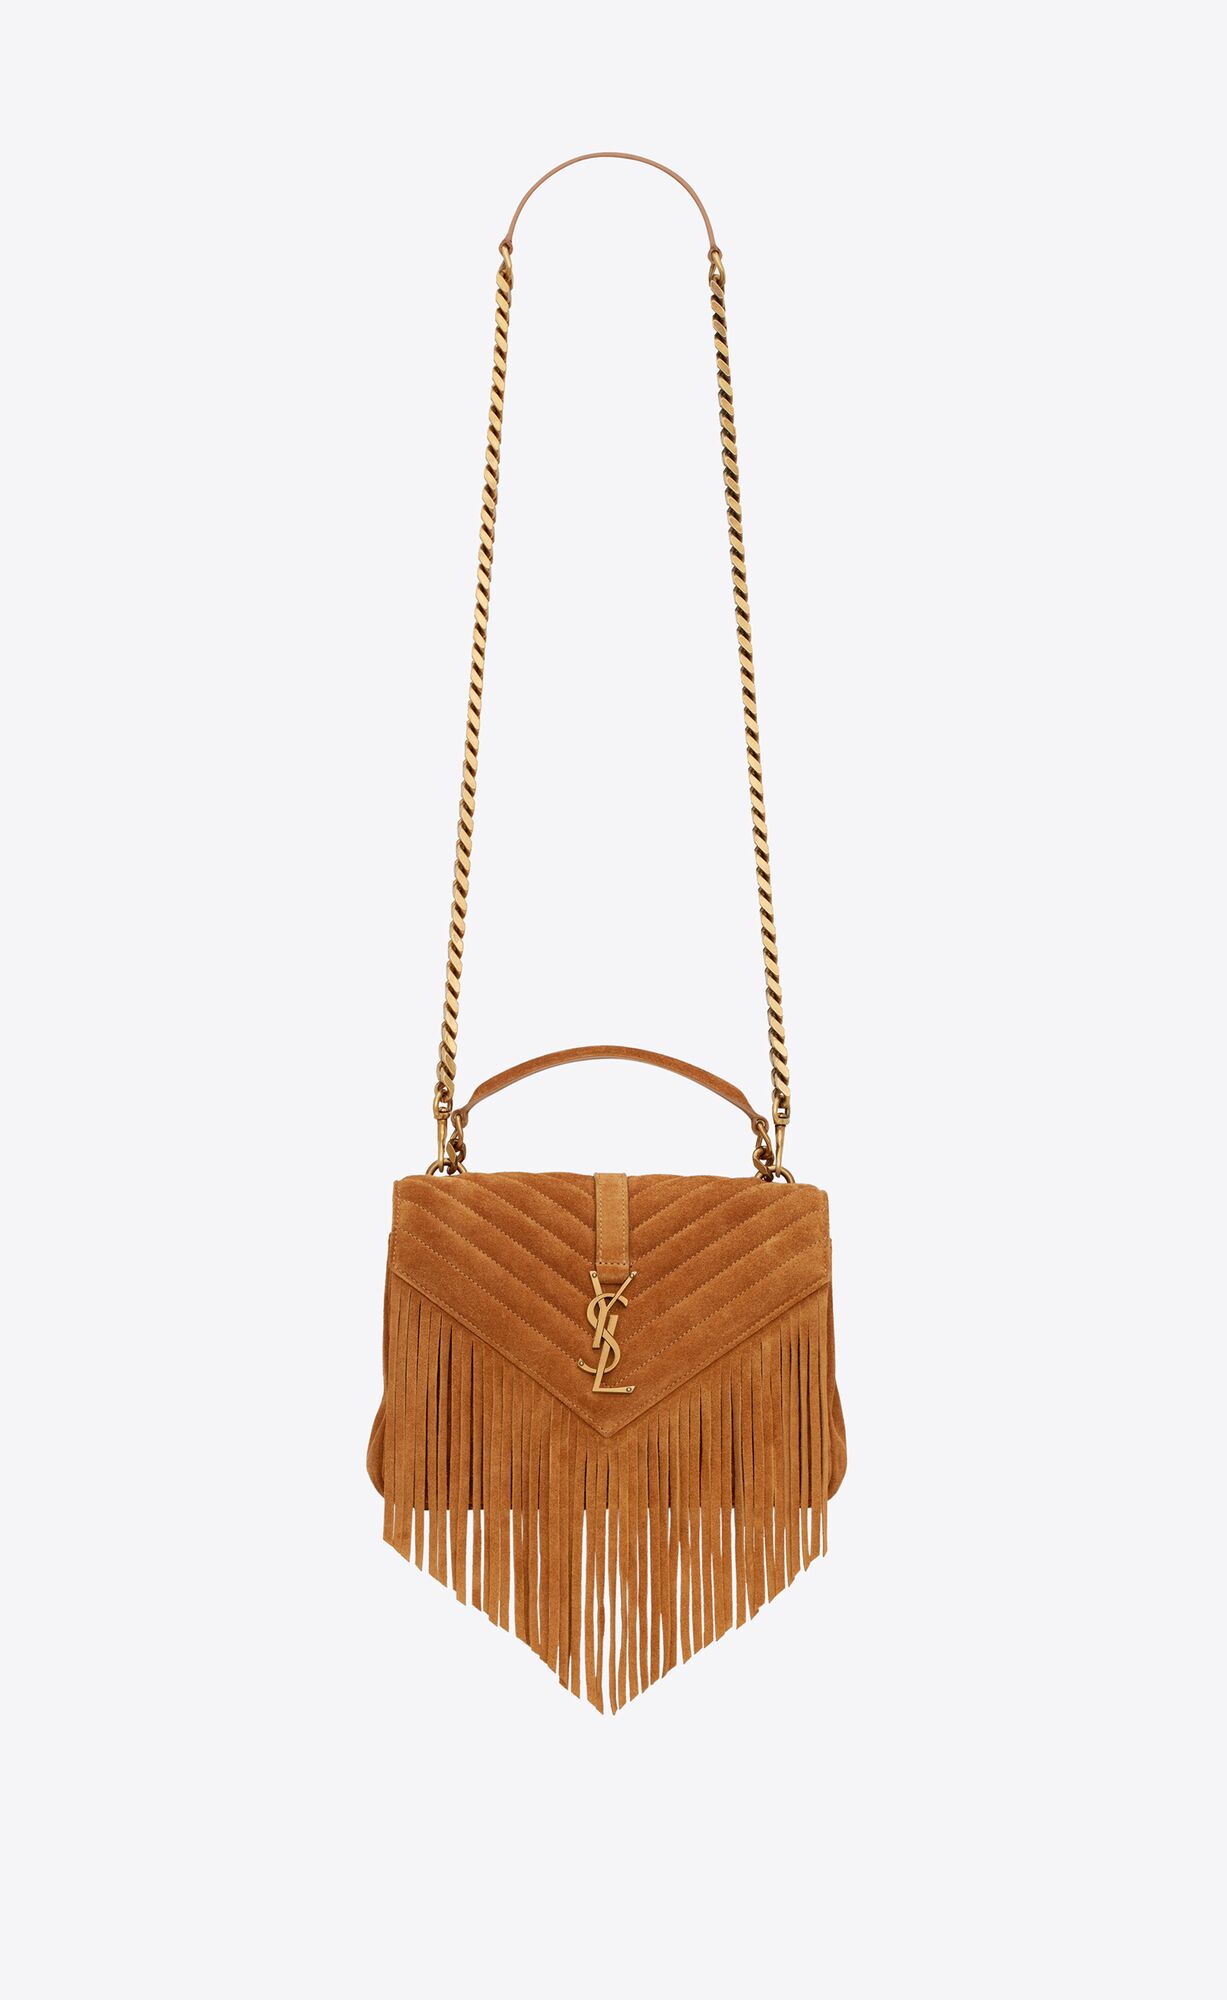 Saint Laurent College Medium Chain Bag In Light Suede With Fringes – Cinnamon – 5317050U0K77761